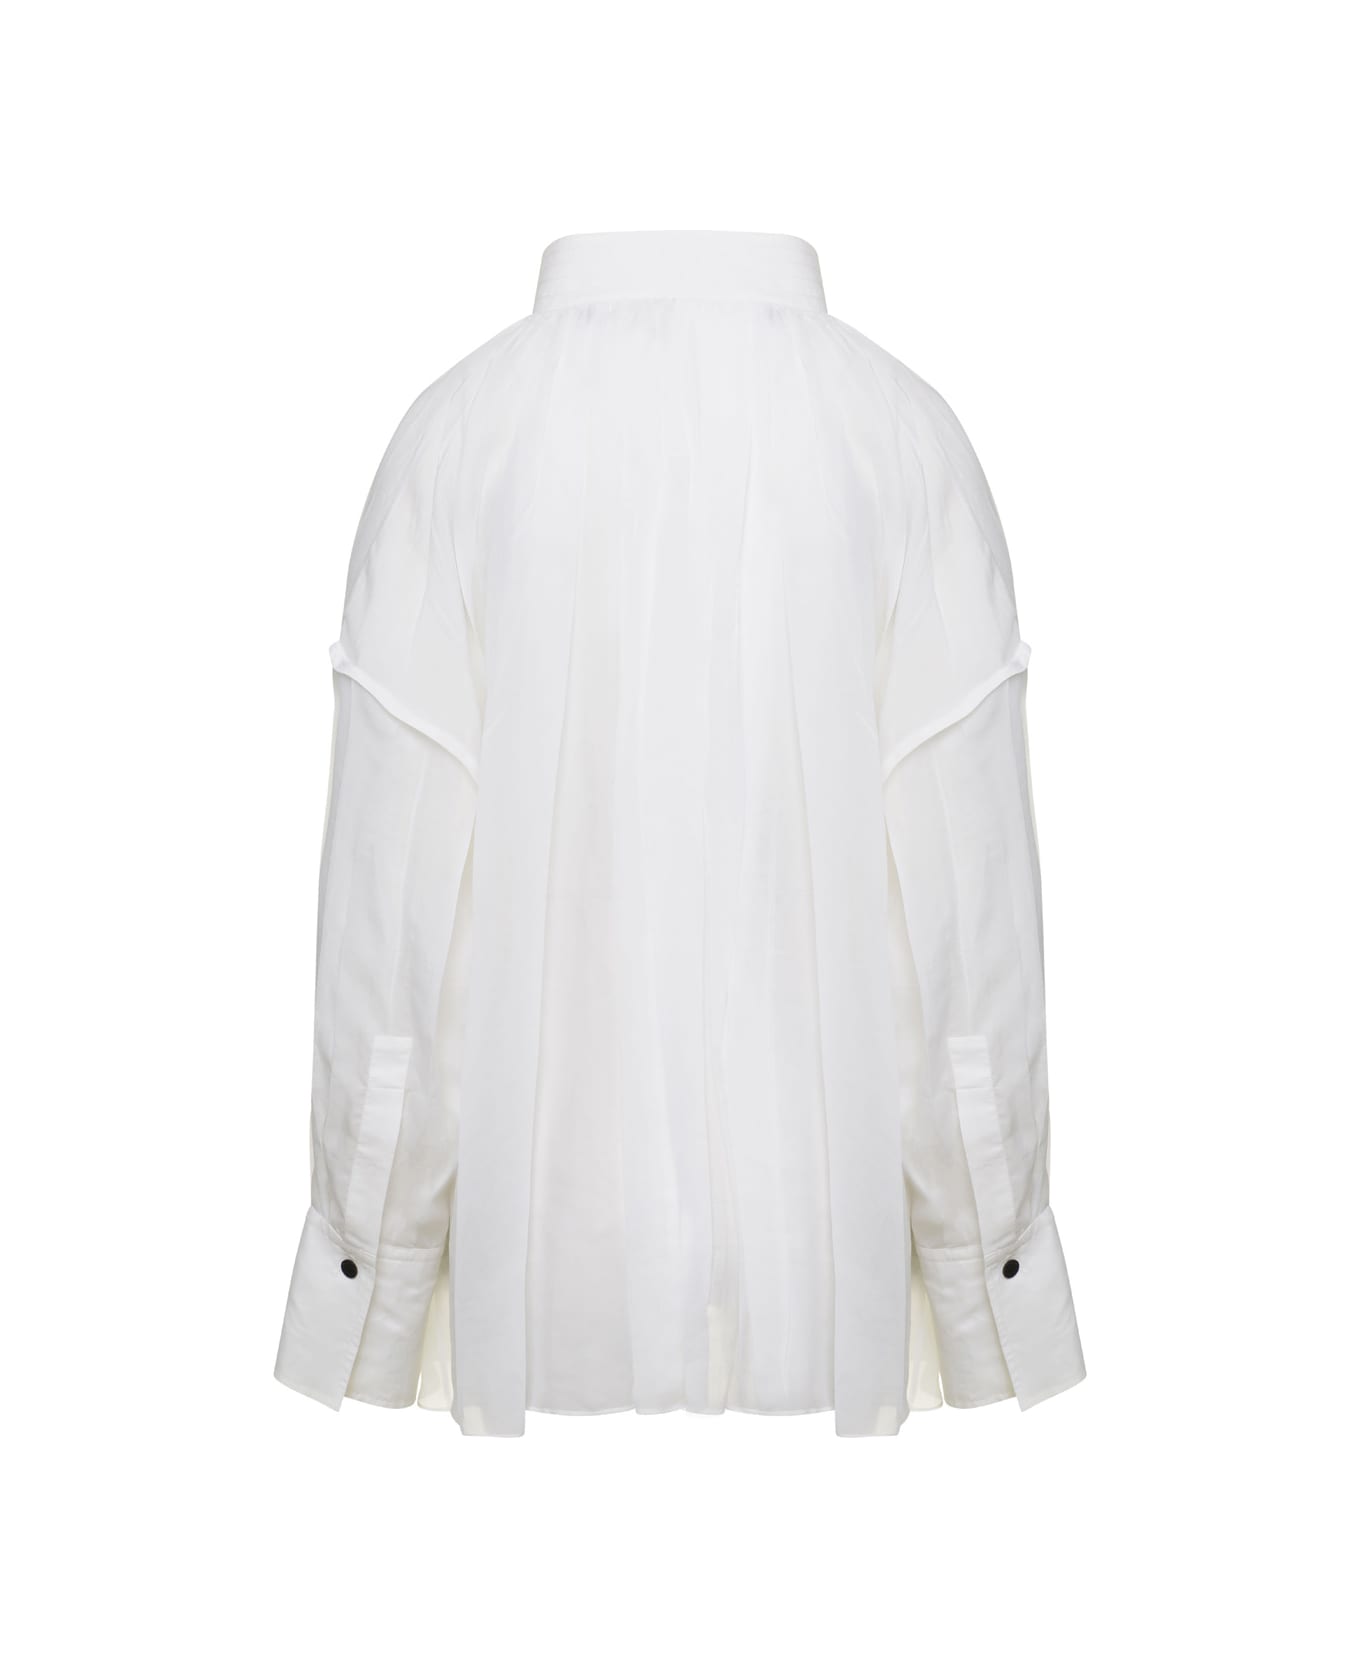 Ferragamo White Caftano Shirt In Silk Blend Woman - White